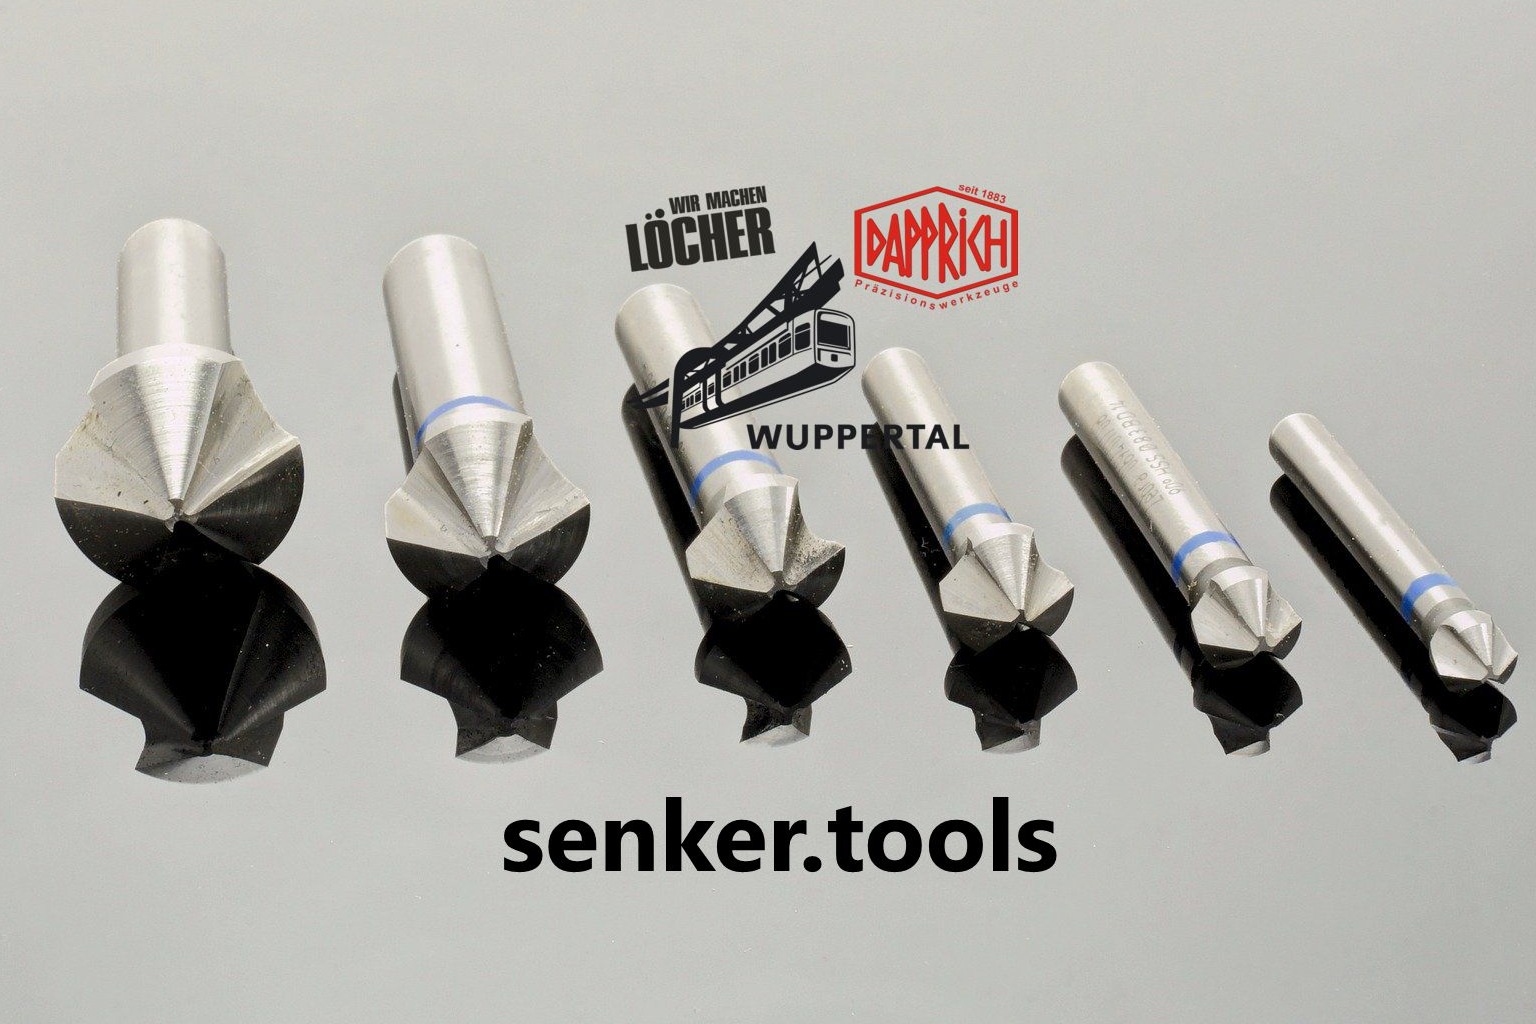 senker.tools by DAPPRICH